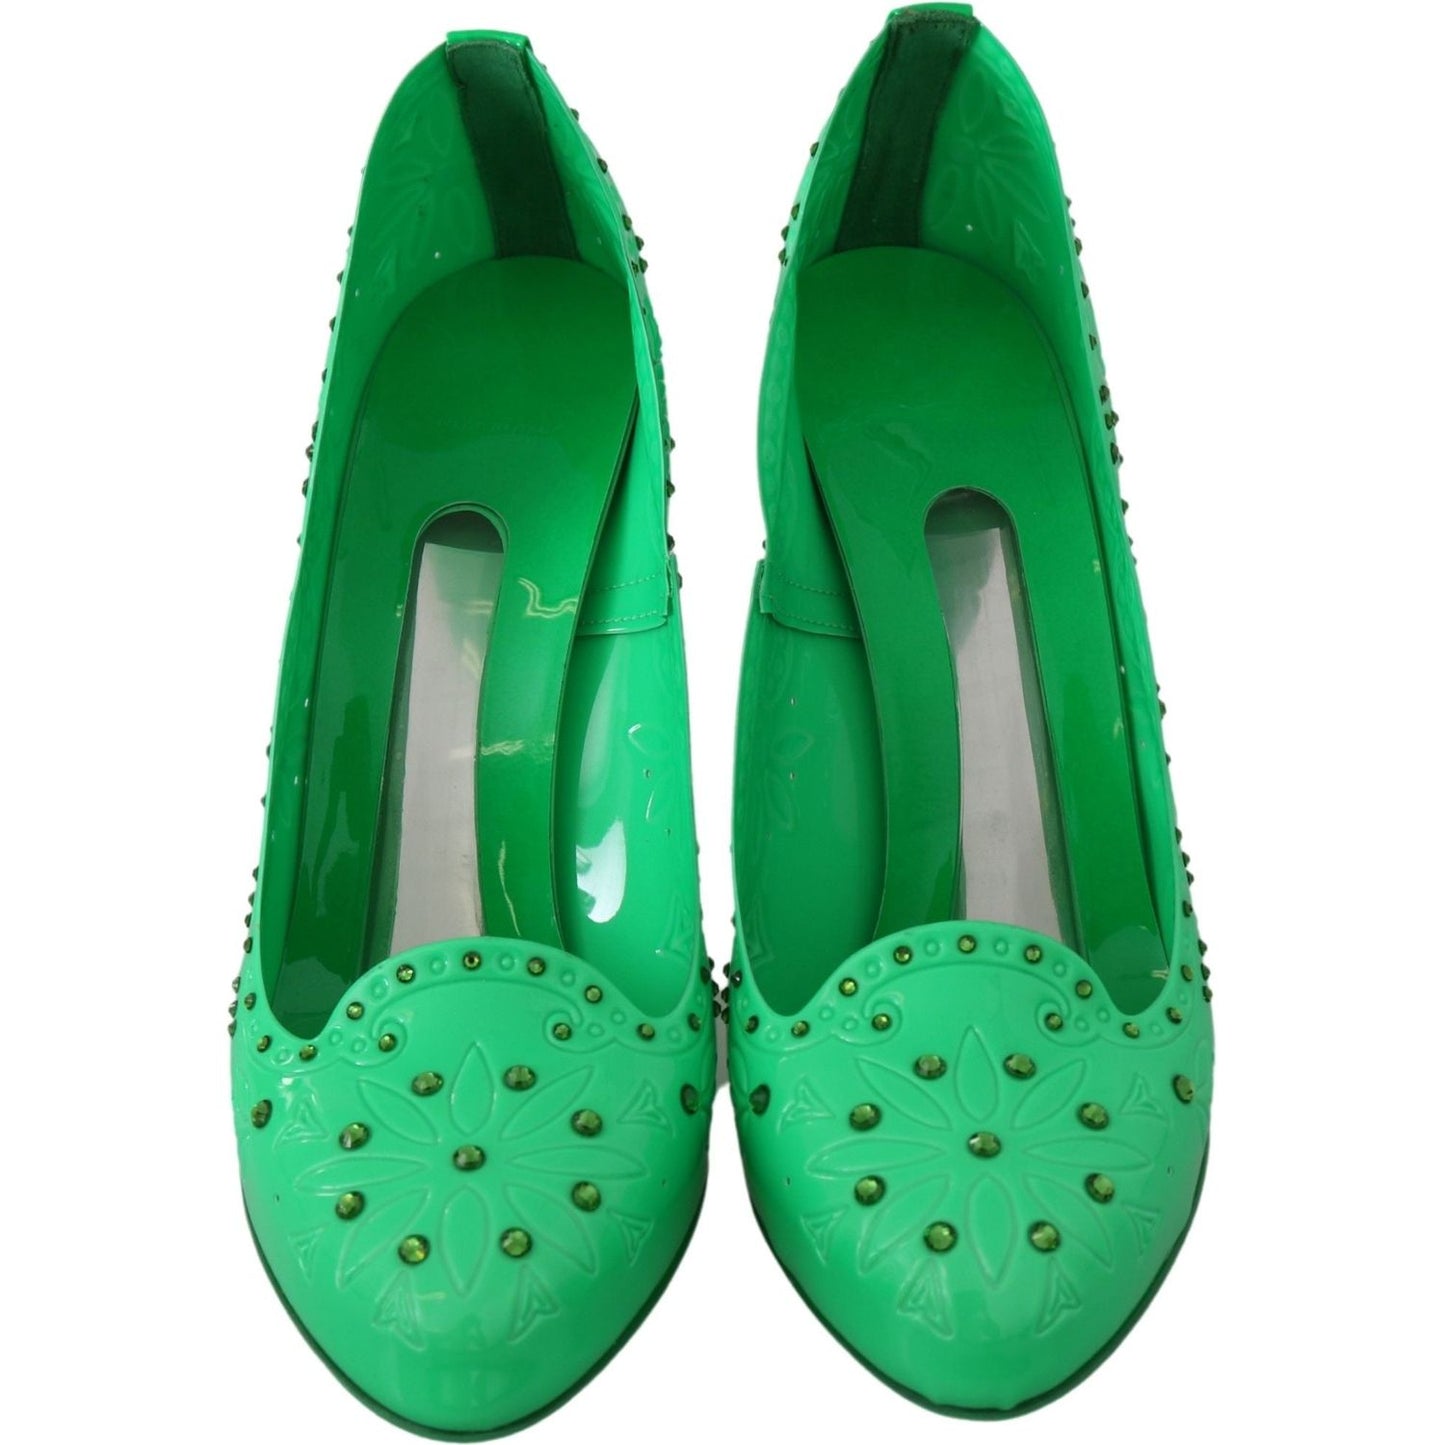 Dolce & Gabbana Enchanting Crystal Cinderella Pumps in Lush Green green-crystal-floral-cinderella-heels-shoes IMG_8138-a609ab21-f88.jpg